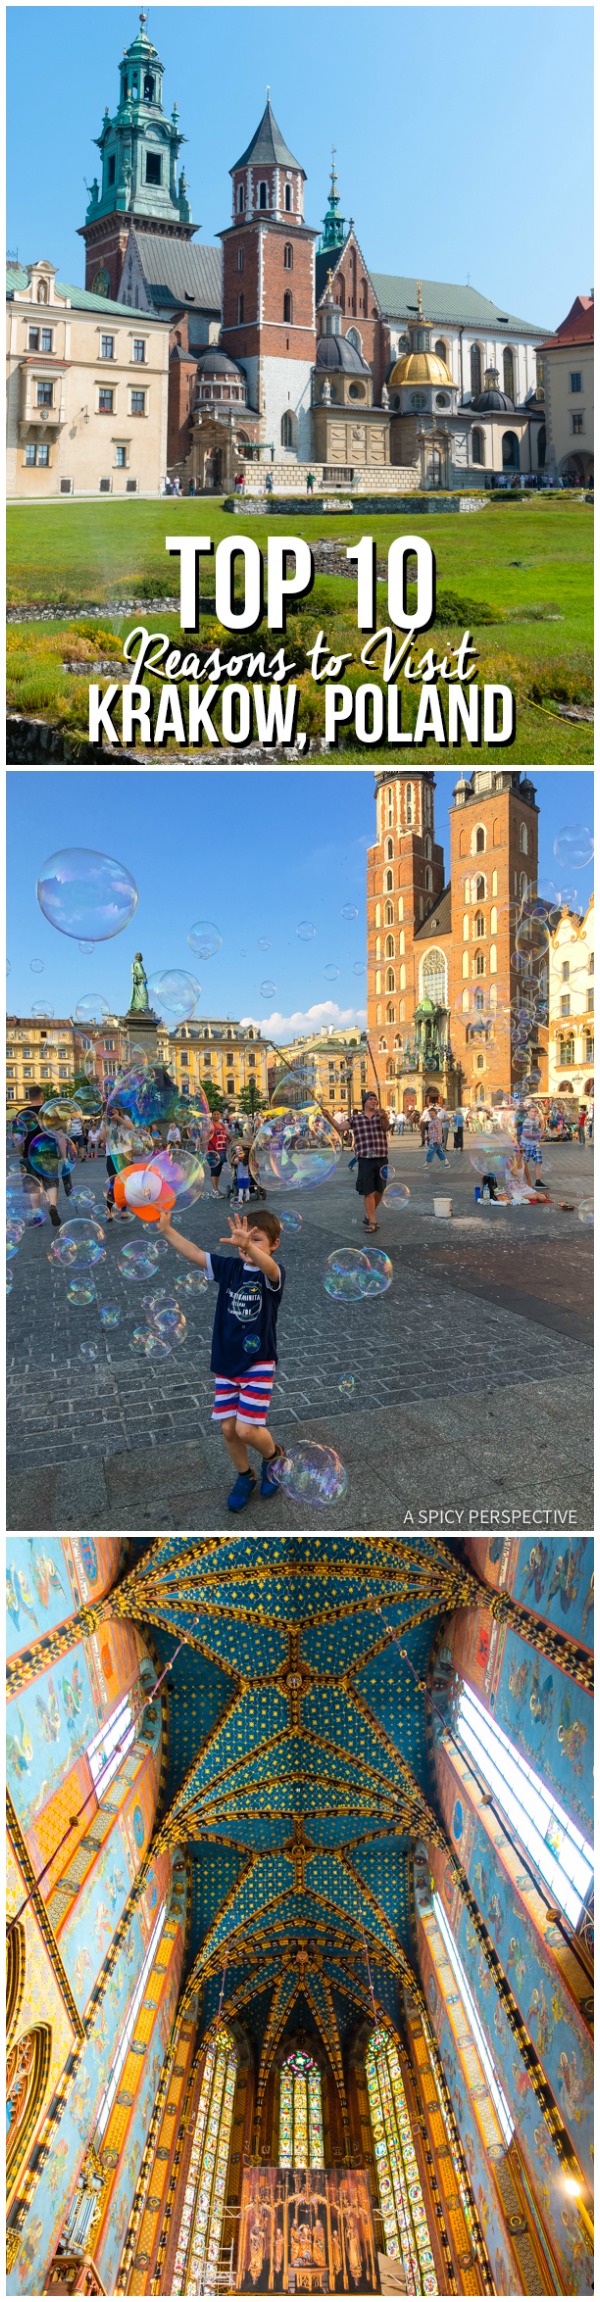 10 Reasons to Visit Krakow, Poland | ASpicyPerspective.com #travel